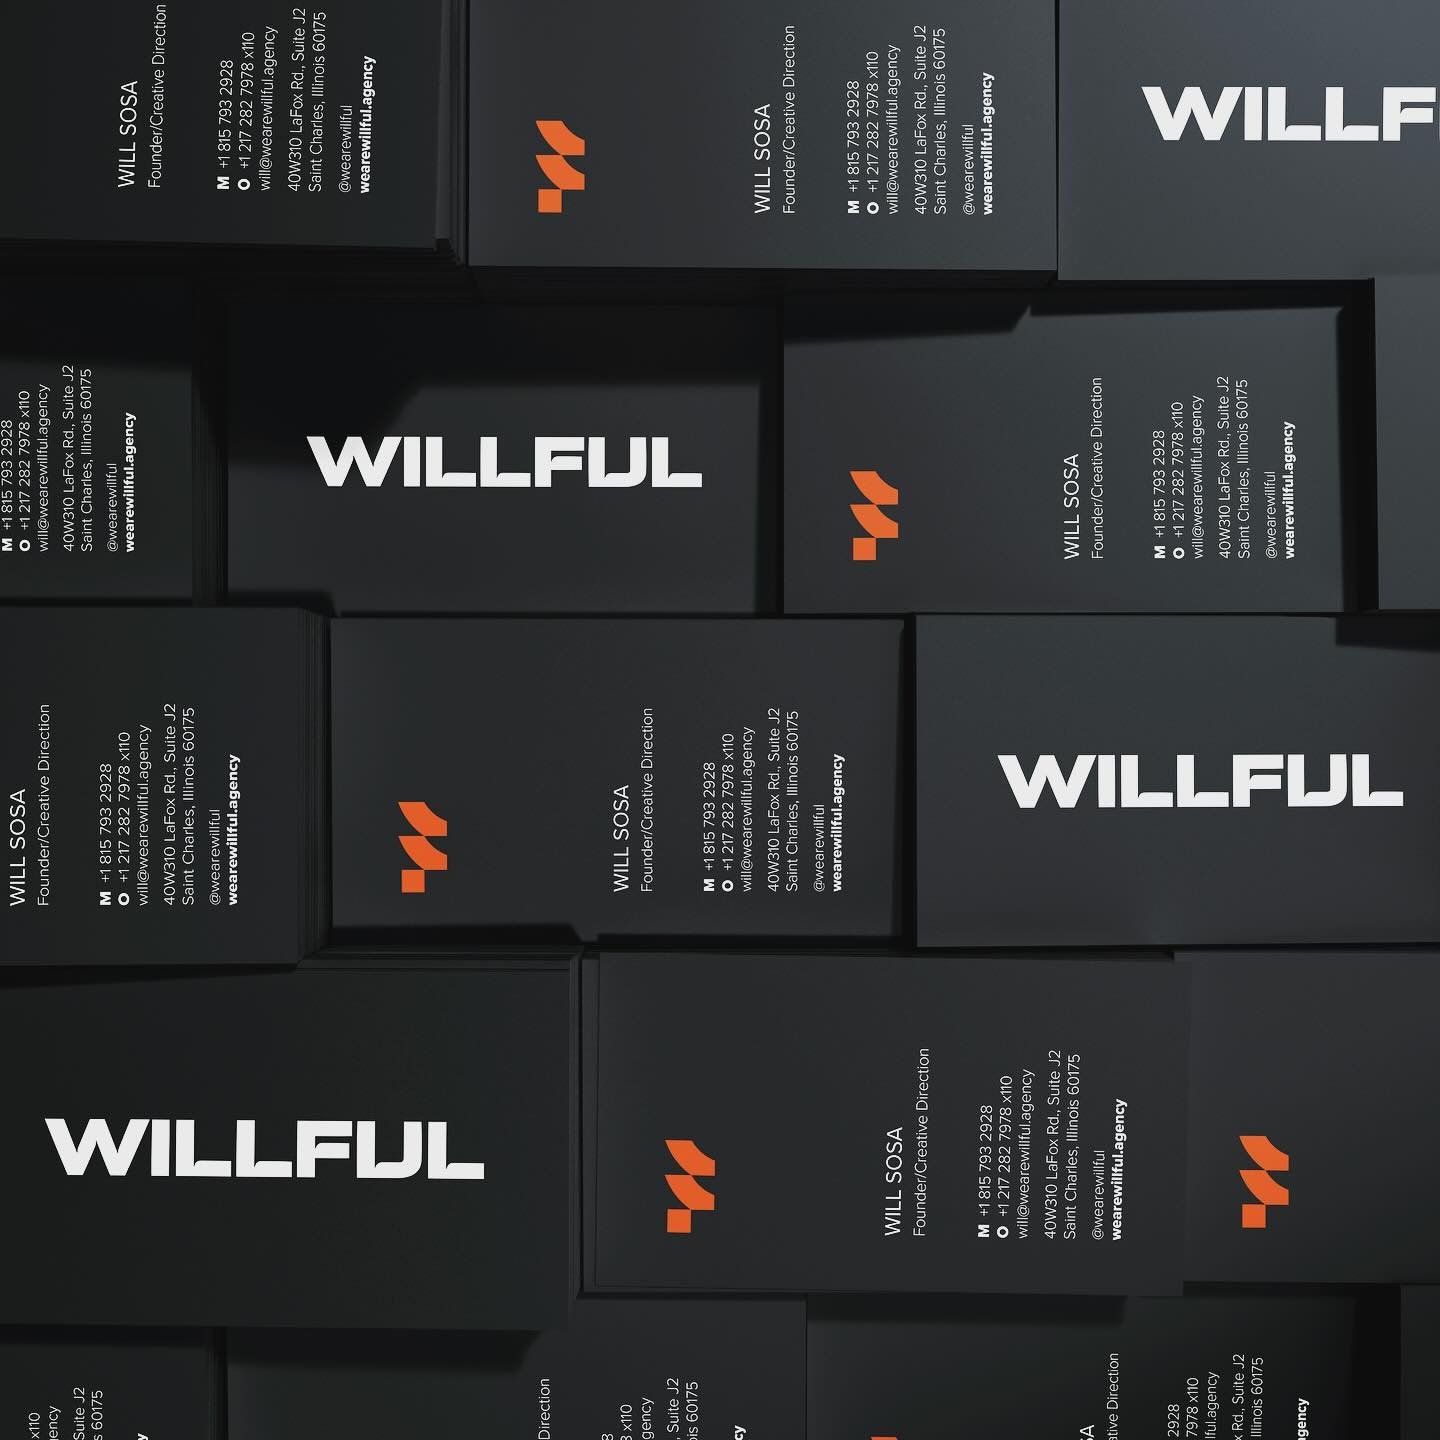 Introducing the new Willful. #rebranding #madebywillful #brandidentity #brandagency #paintitblack #backinblack